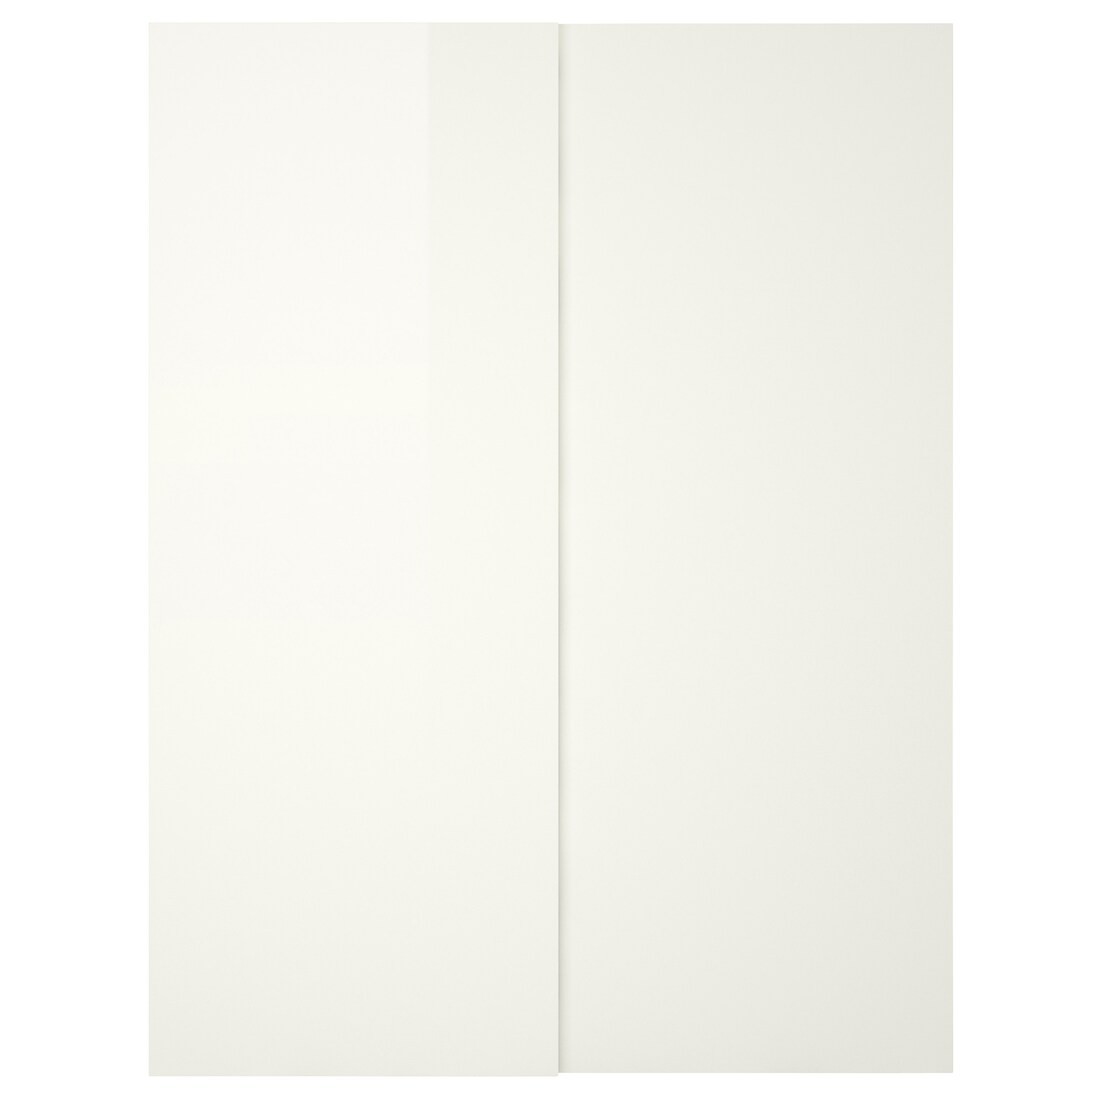 HASVIK ХАСВИК Пара раздвижных дверей, глянцевый белый, 150x236 см